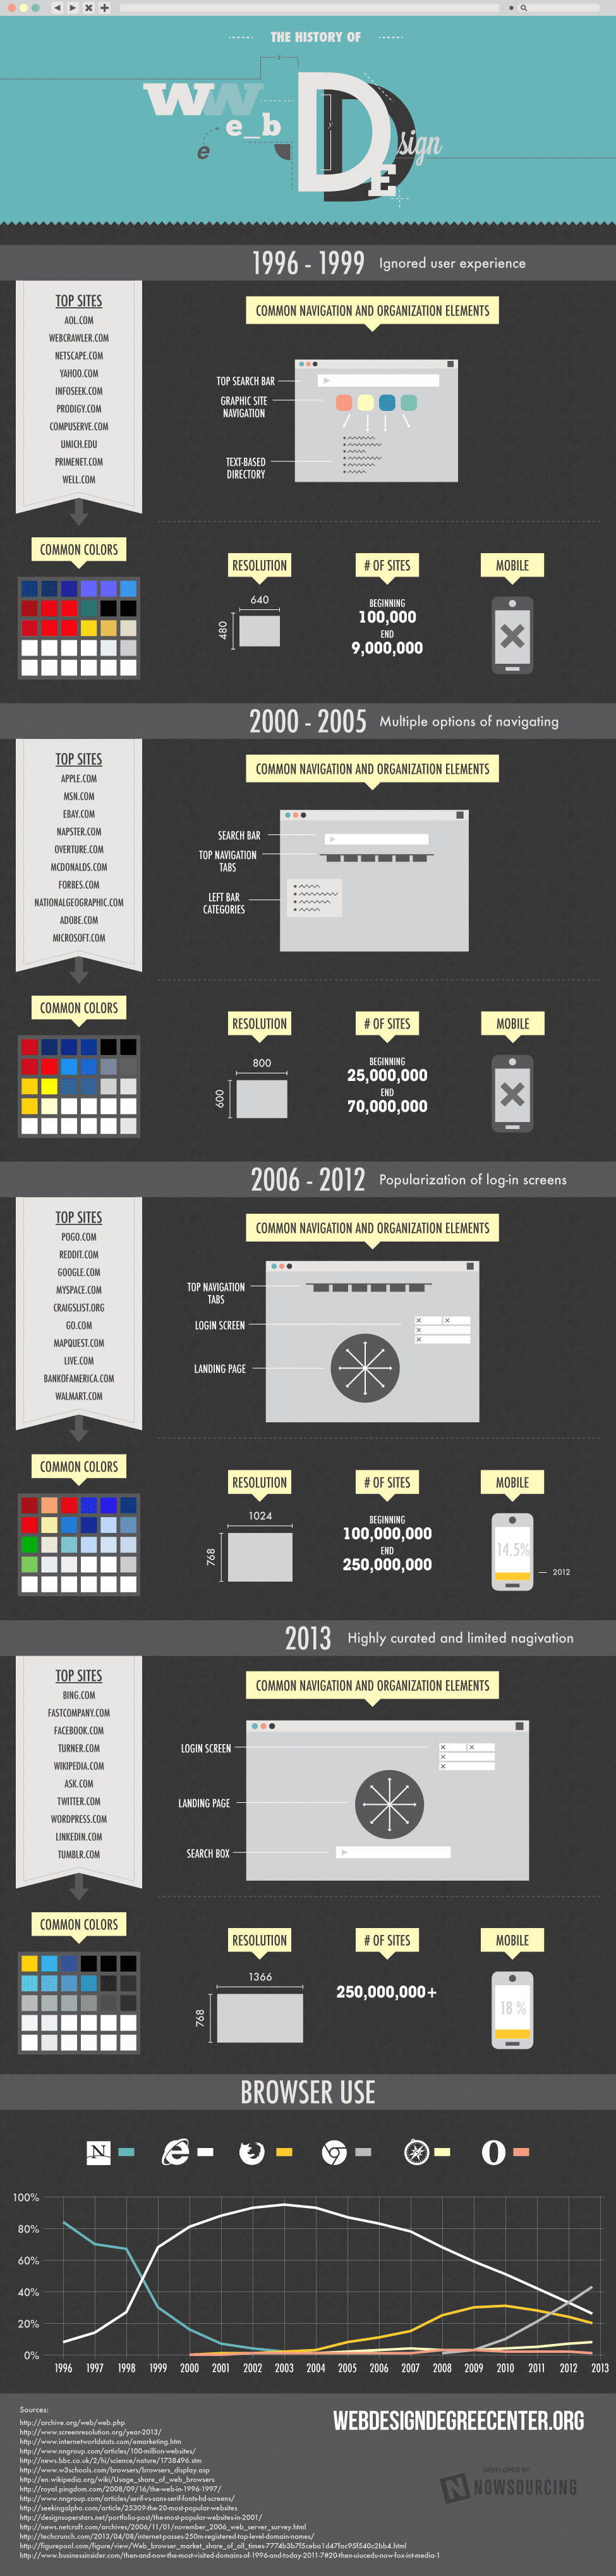 Web Design History Timeline Infographic